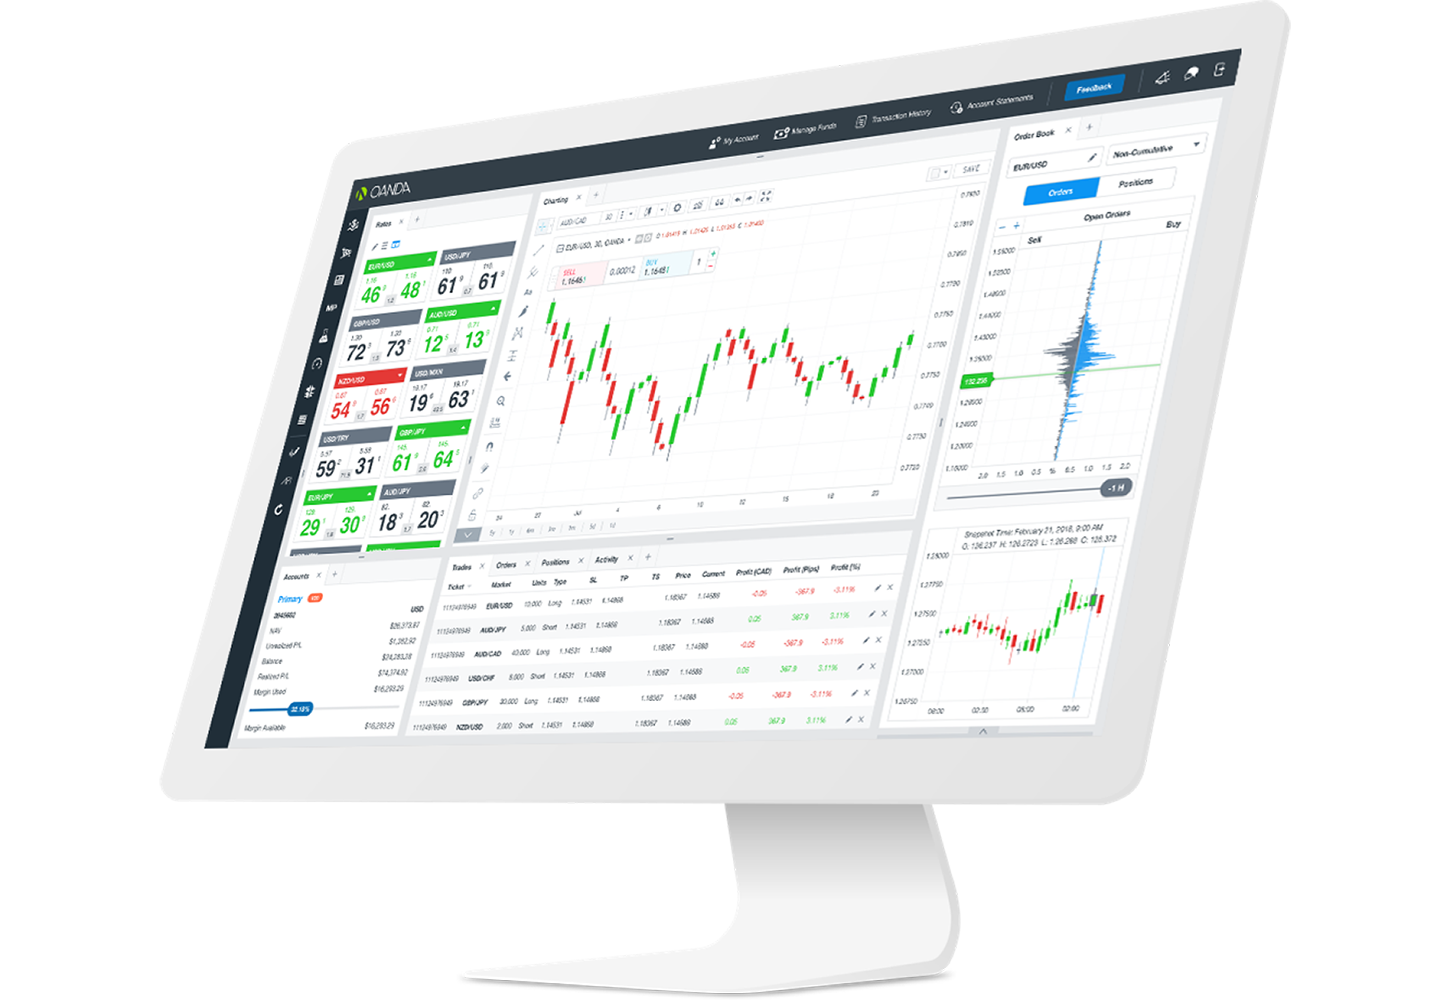 Open source trading platform